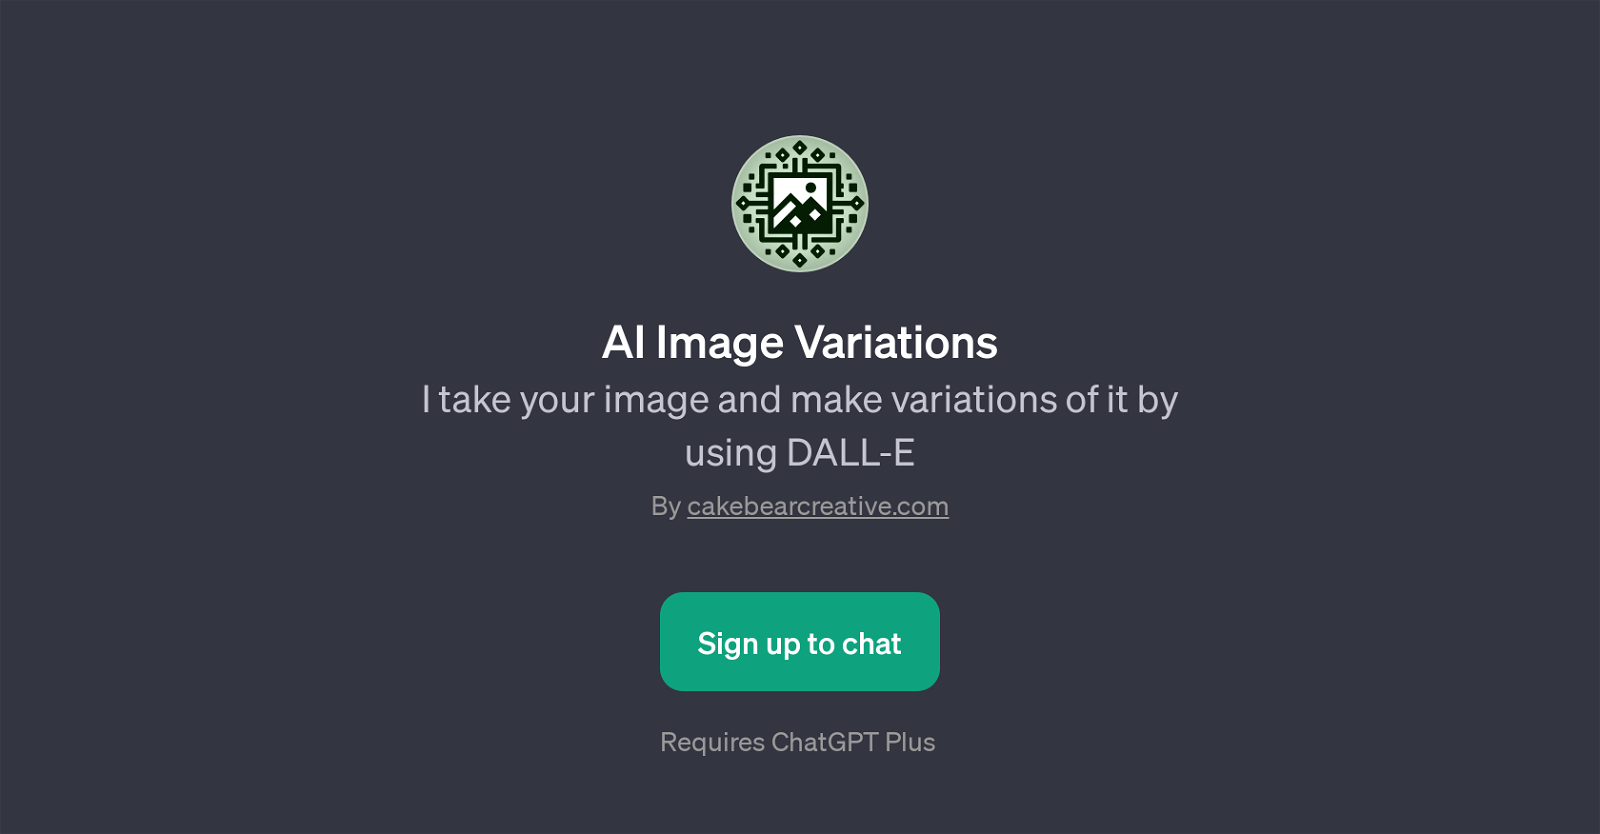 AI Image Variations website